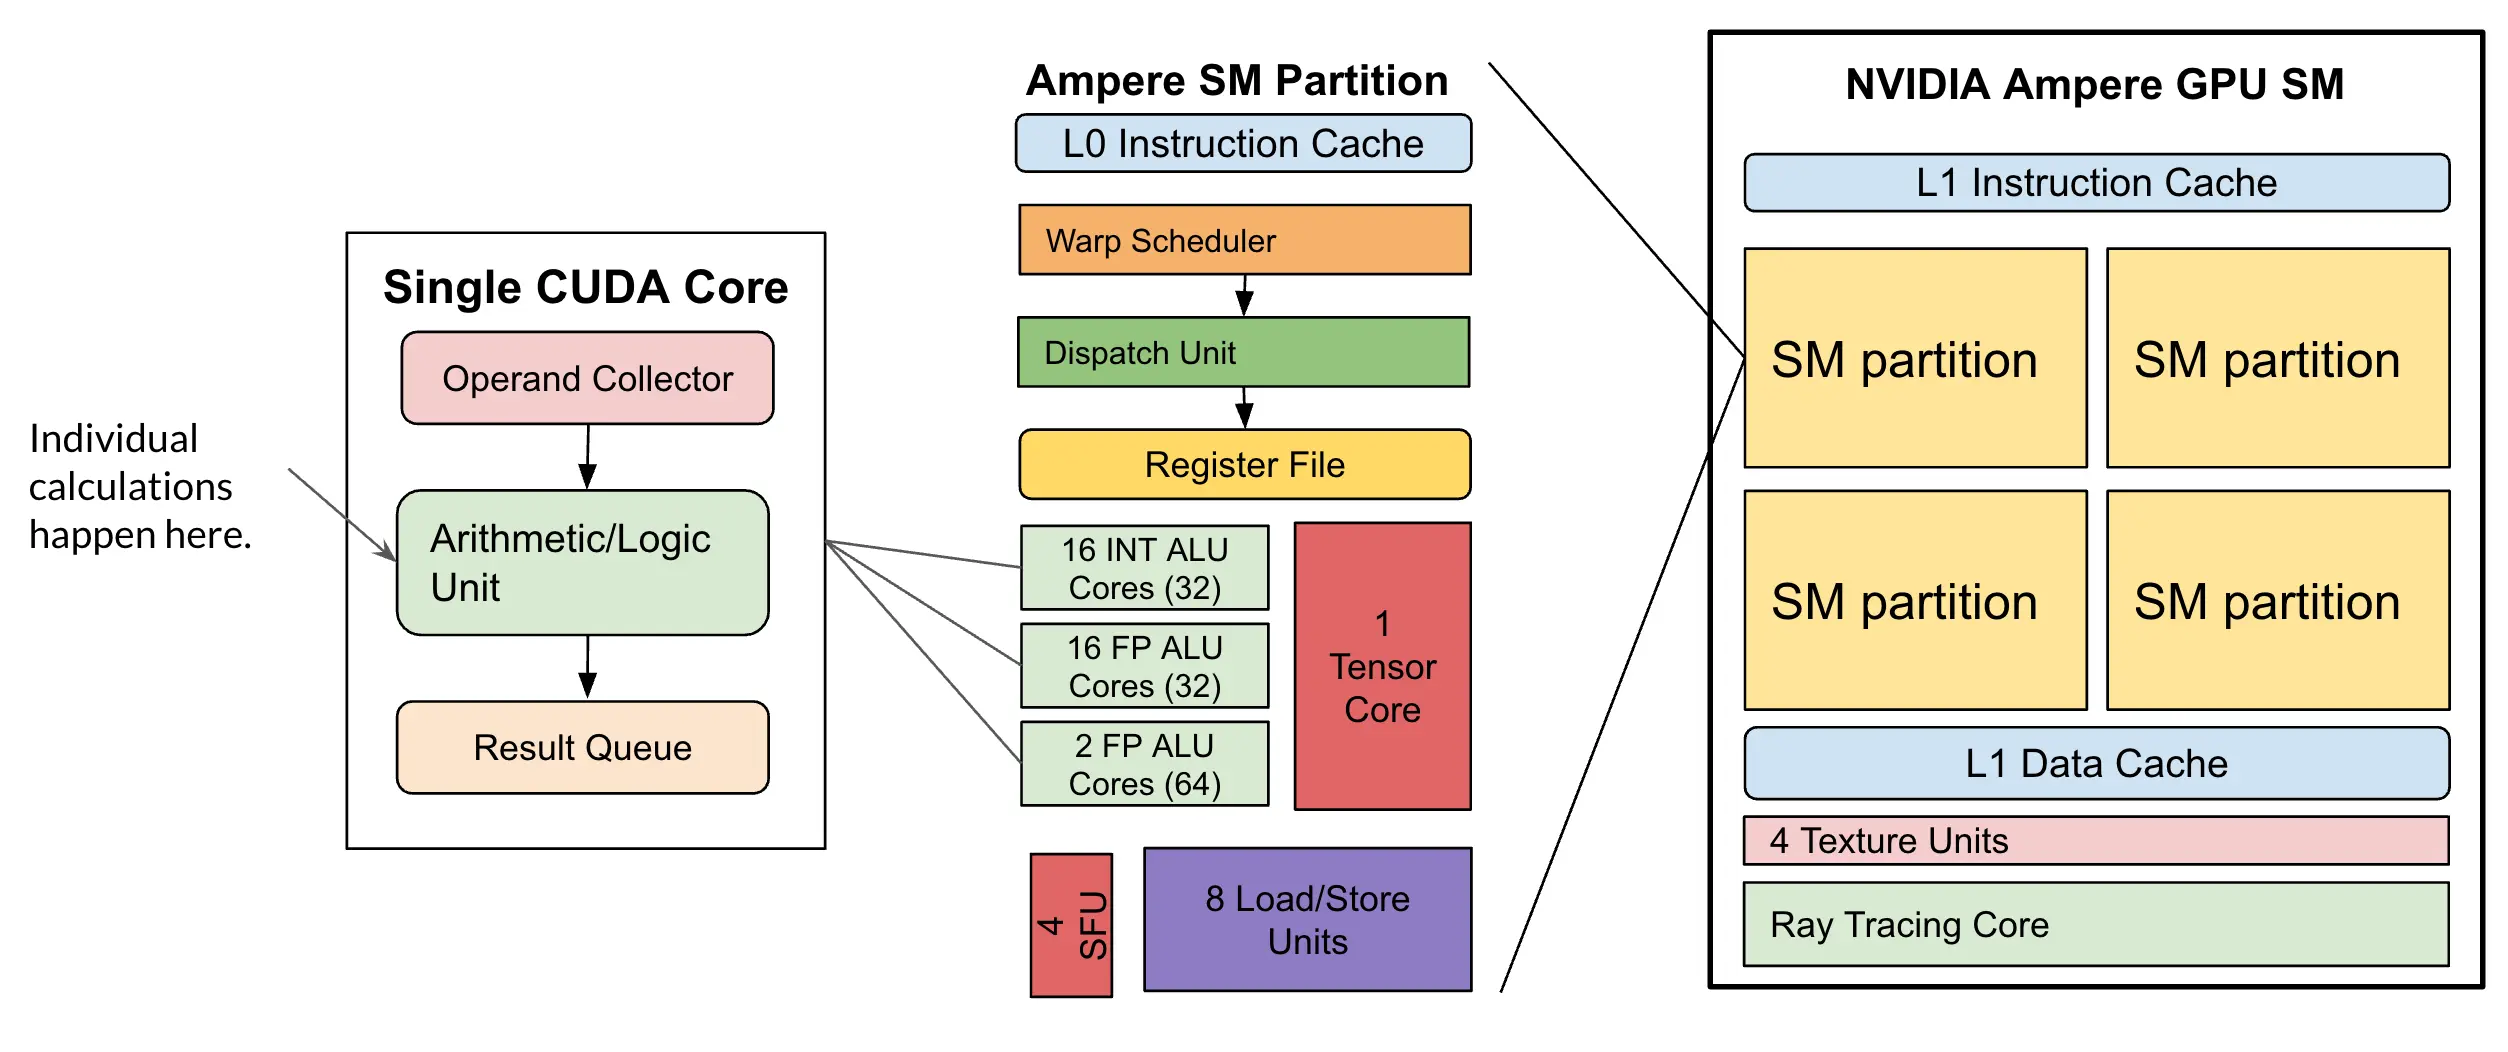 Diagram of NVIDIA Ampere GPU components